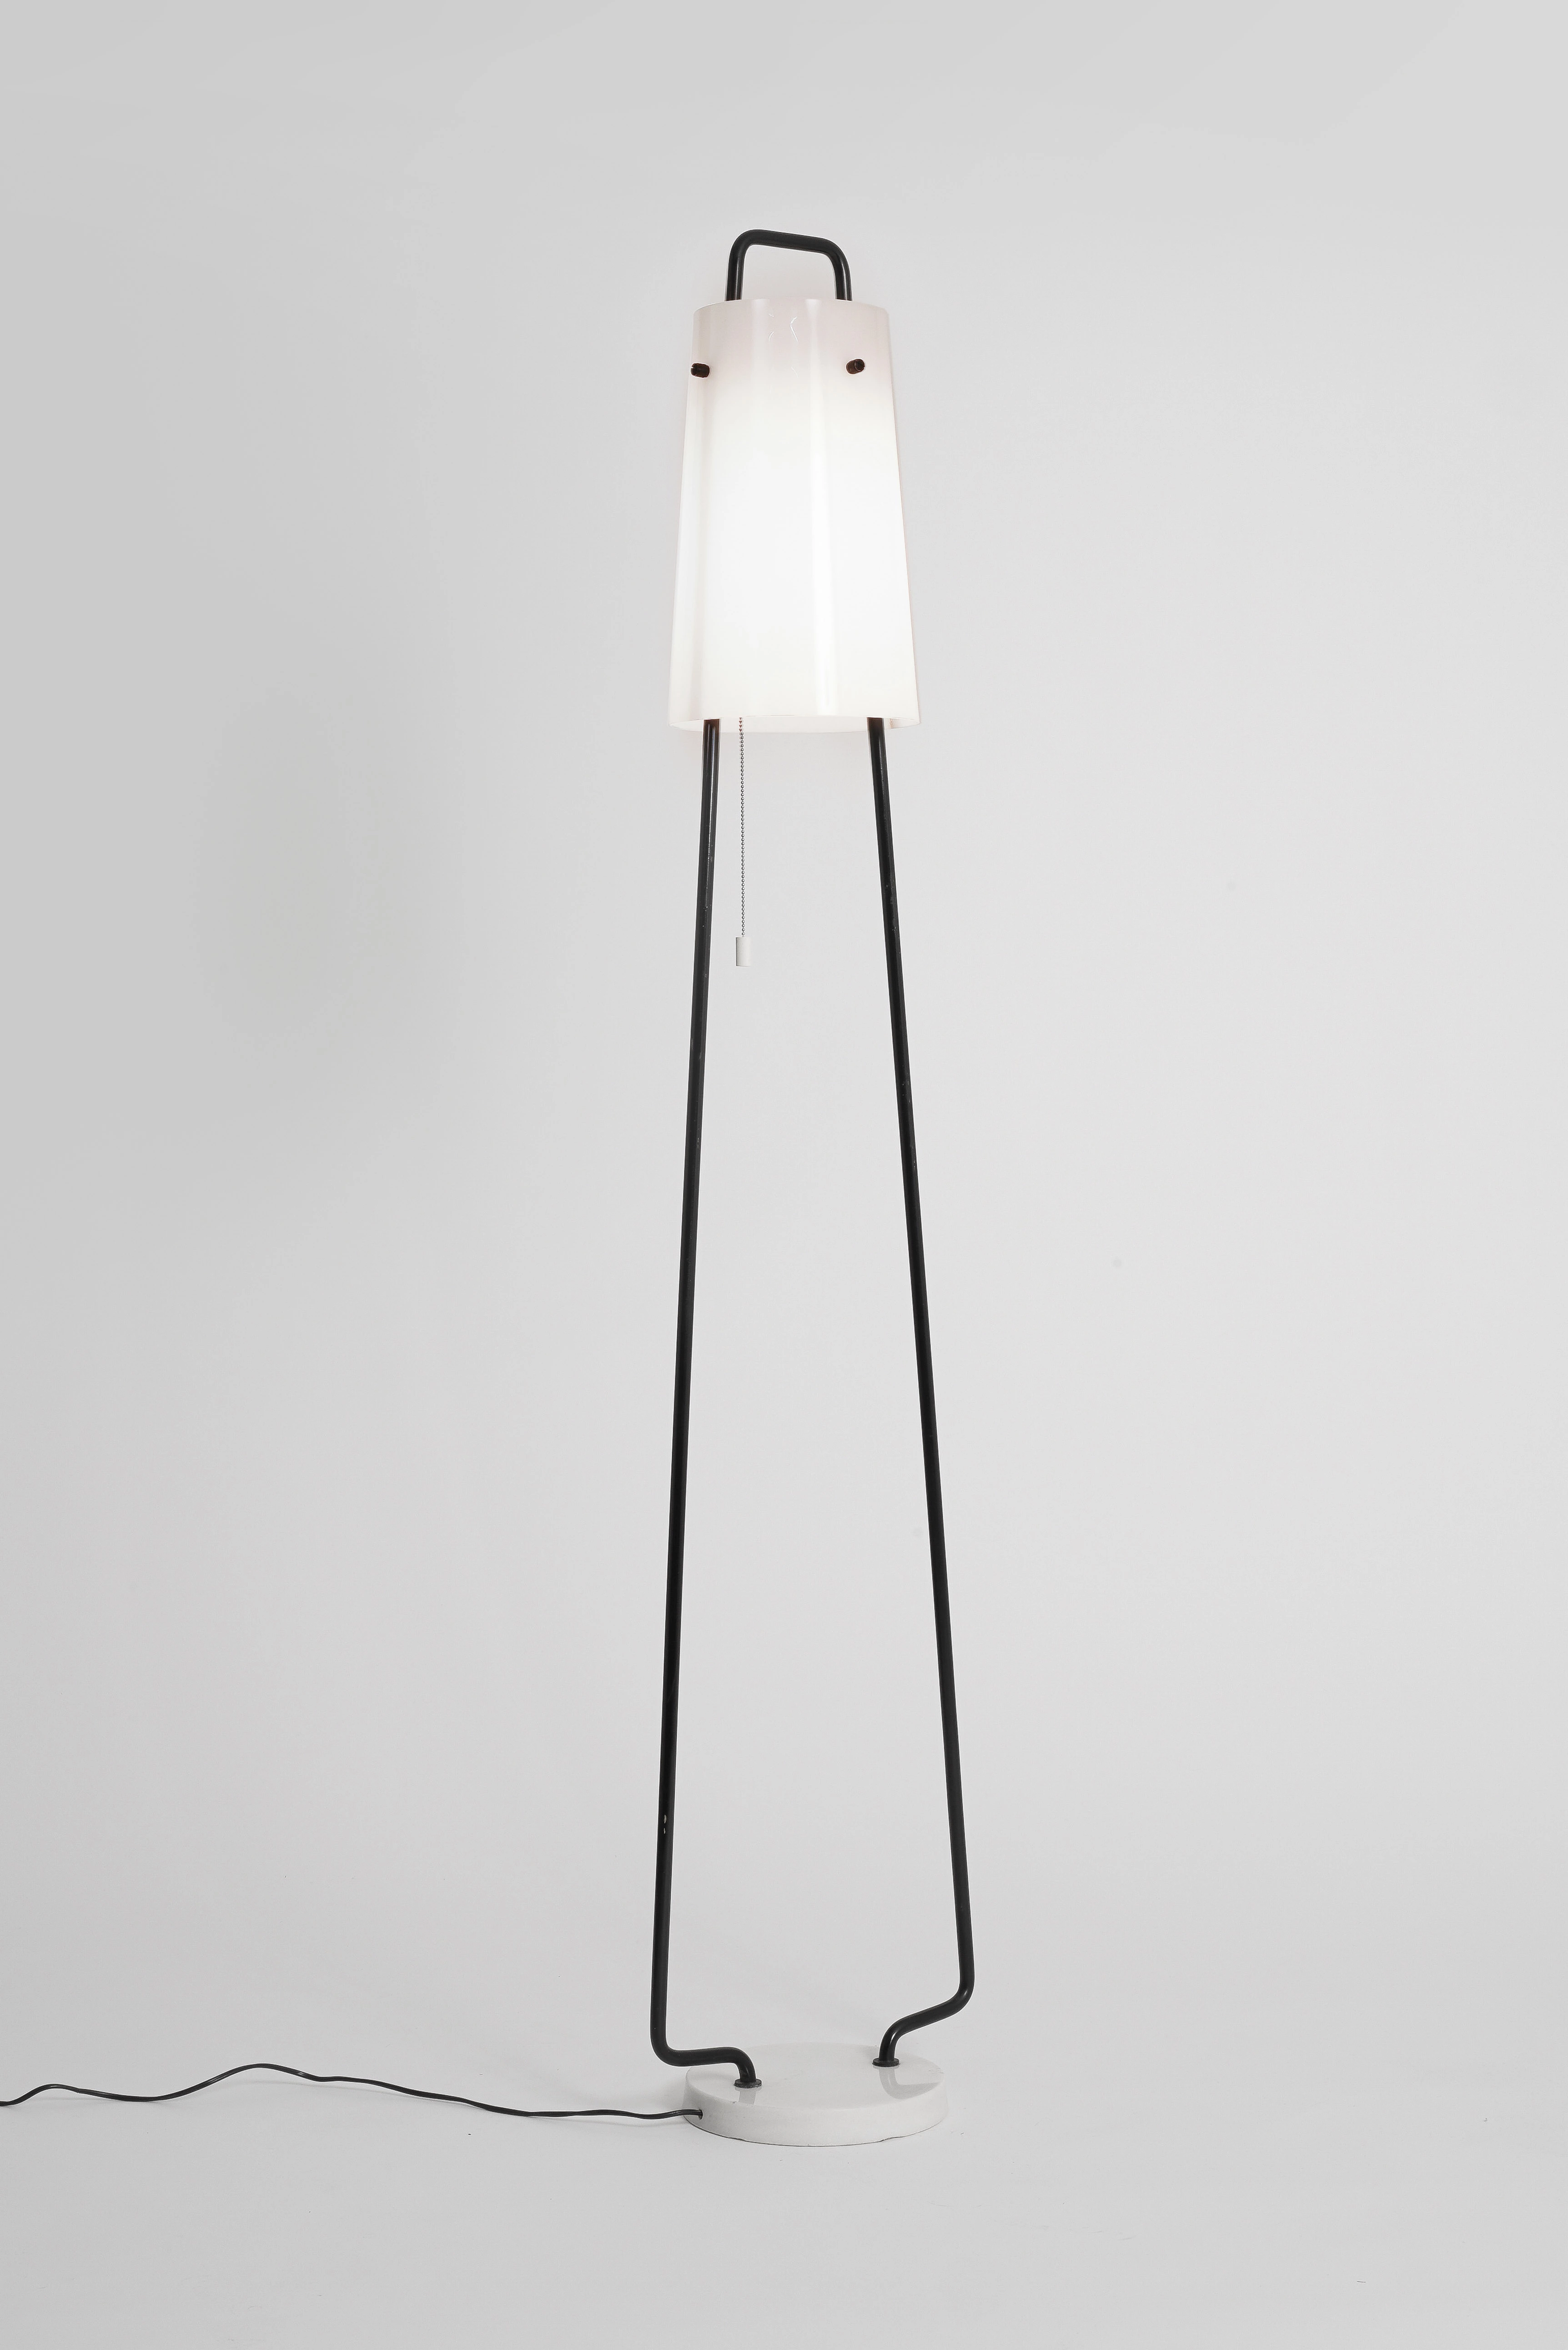 1068 - Gino Sarfatti - Floor light - Galerie kreo